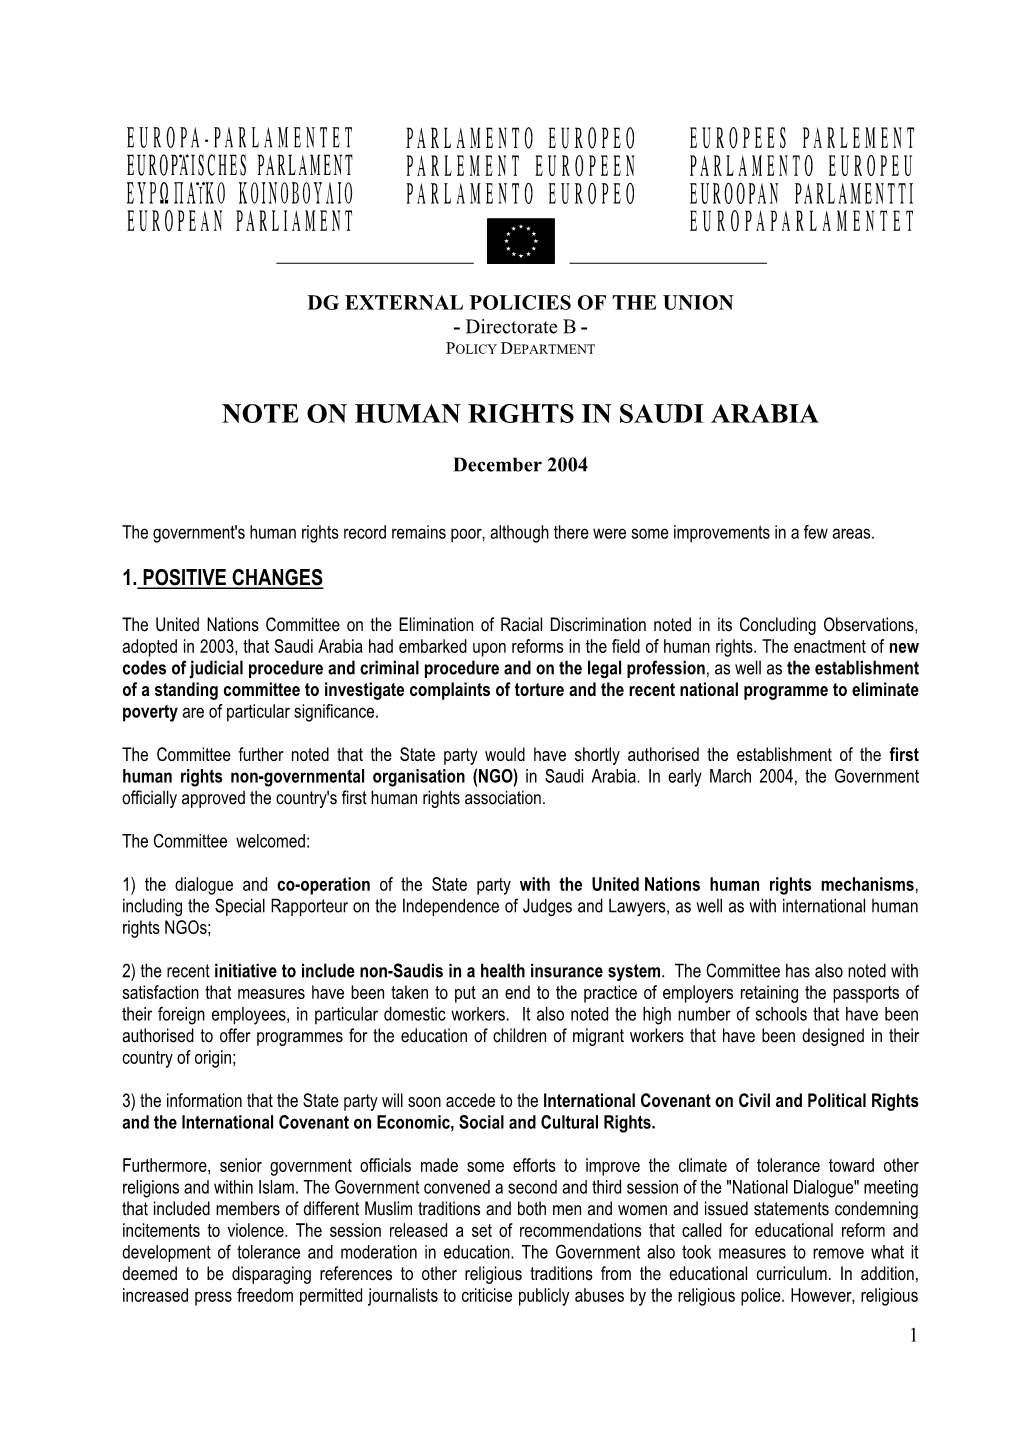 Note on Human Rights in Saudi Arabia